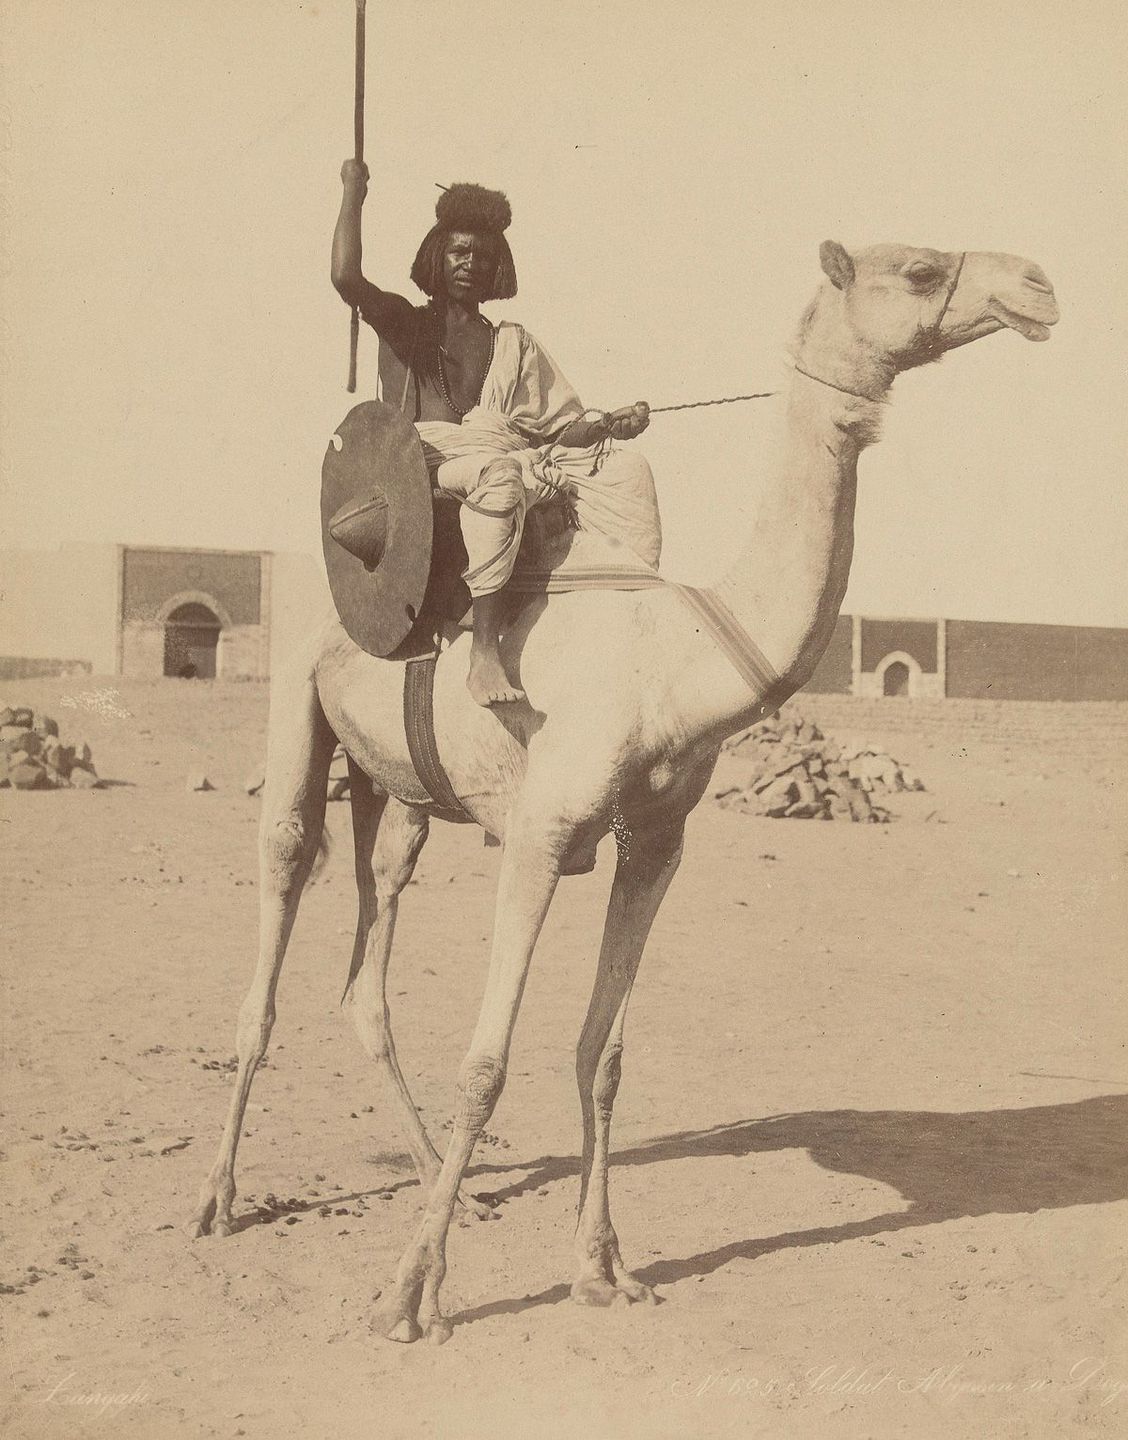 Bicharin soldier on a camel.